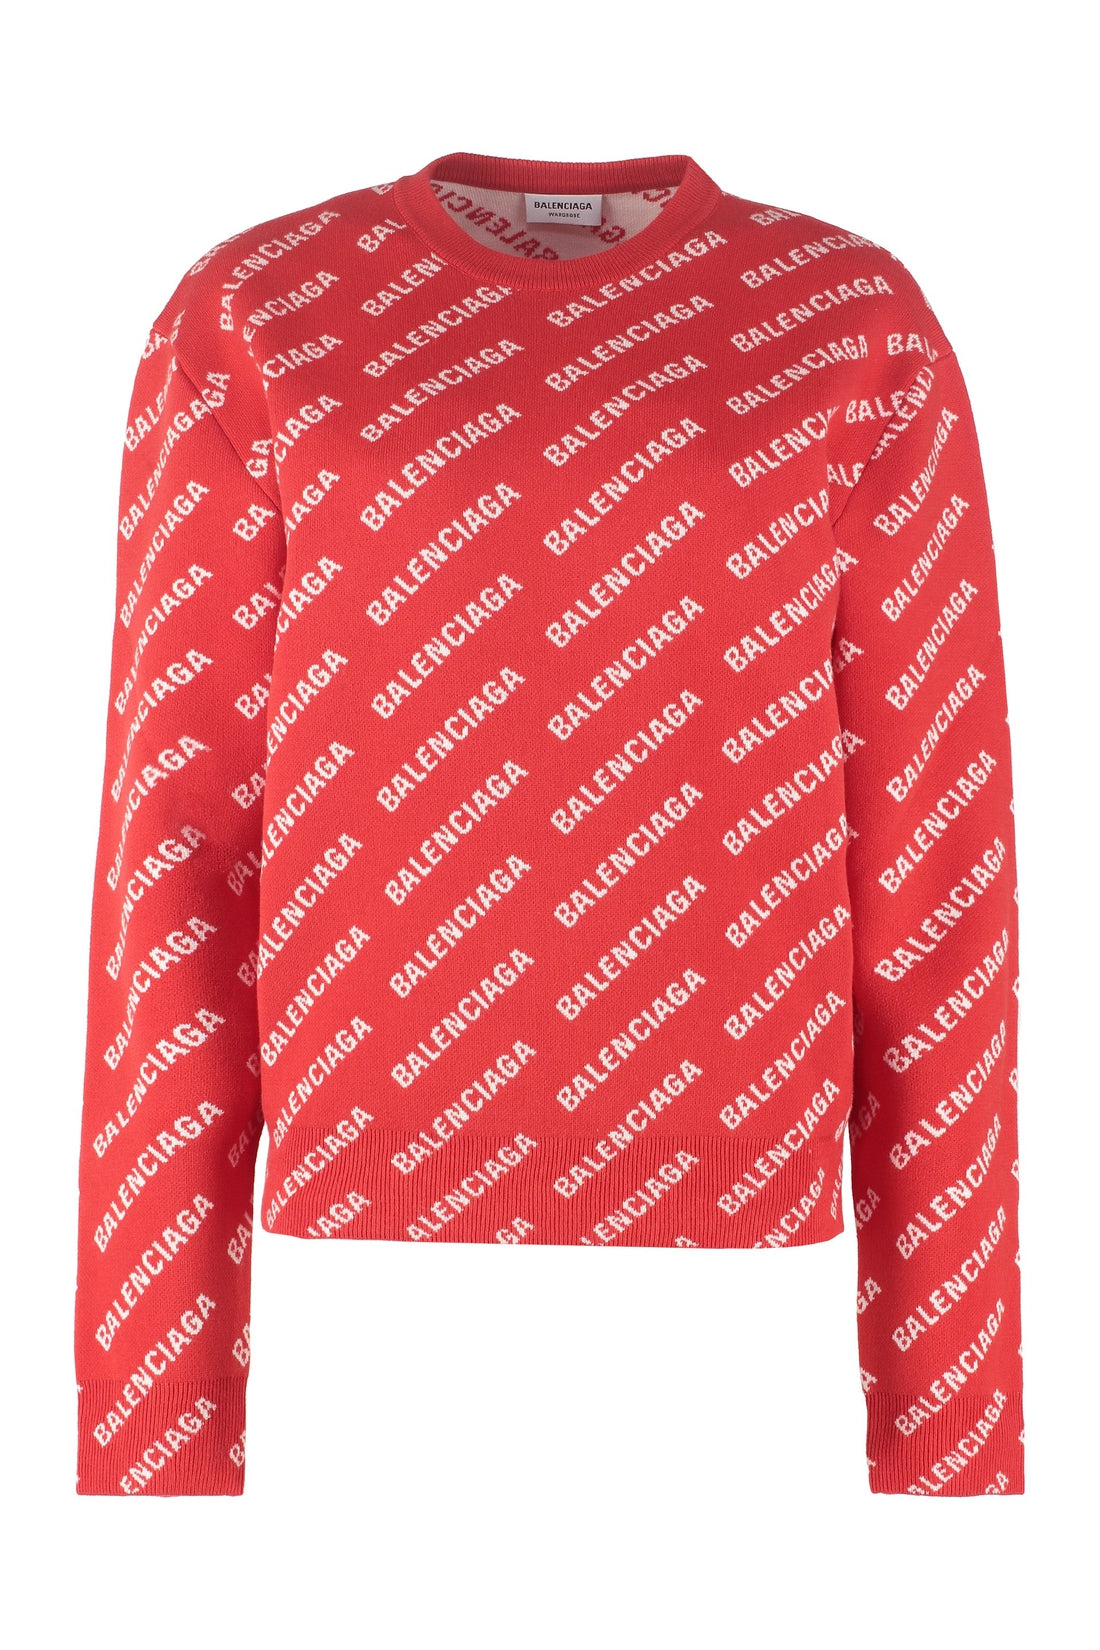 Balenciaga-OUTLET-SALE-All-over logo crew-neck sweater-ARCHIVIST